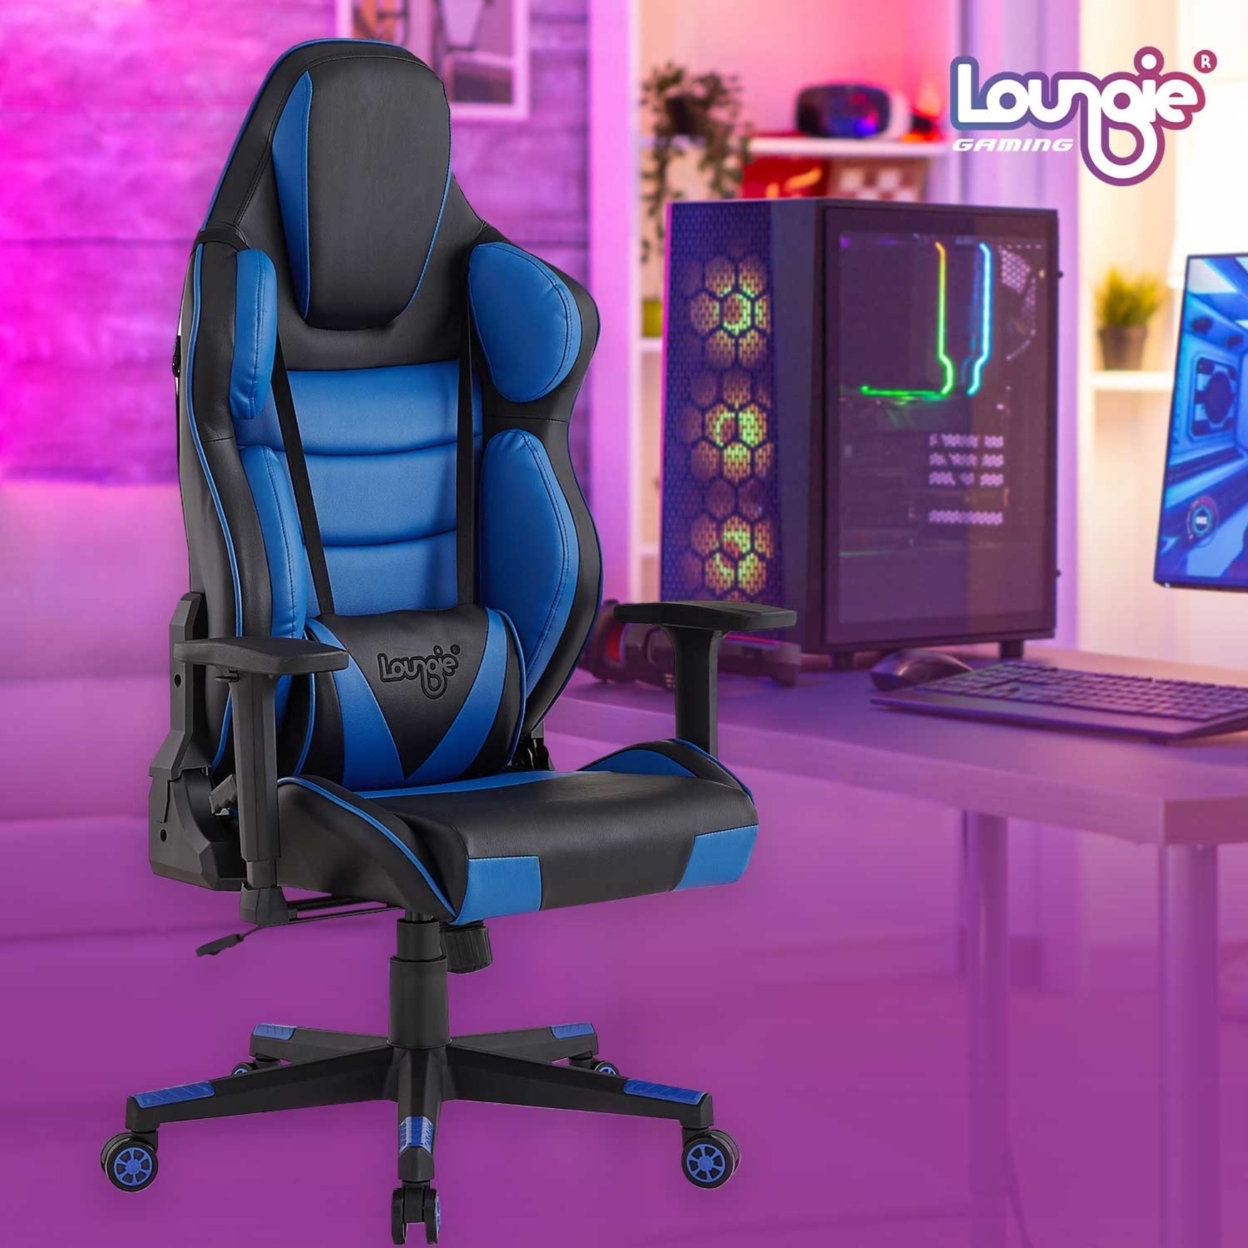 Kiya Game Chair-Swivel, Adjustable Back Angle, Seat Height and Armrest-Big Headrest, 360 Degree Rotation-Lumbar Support Cushion - navy - navy blue